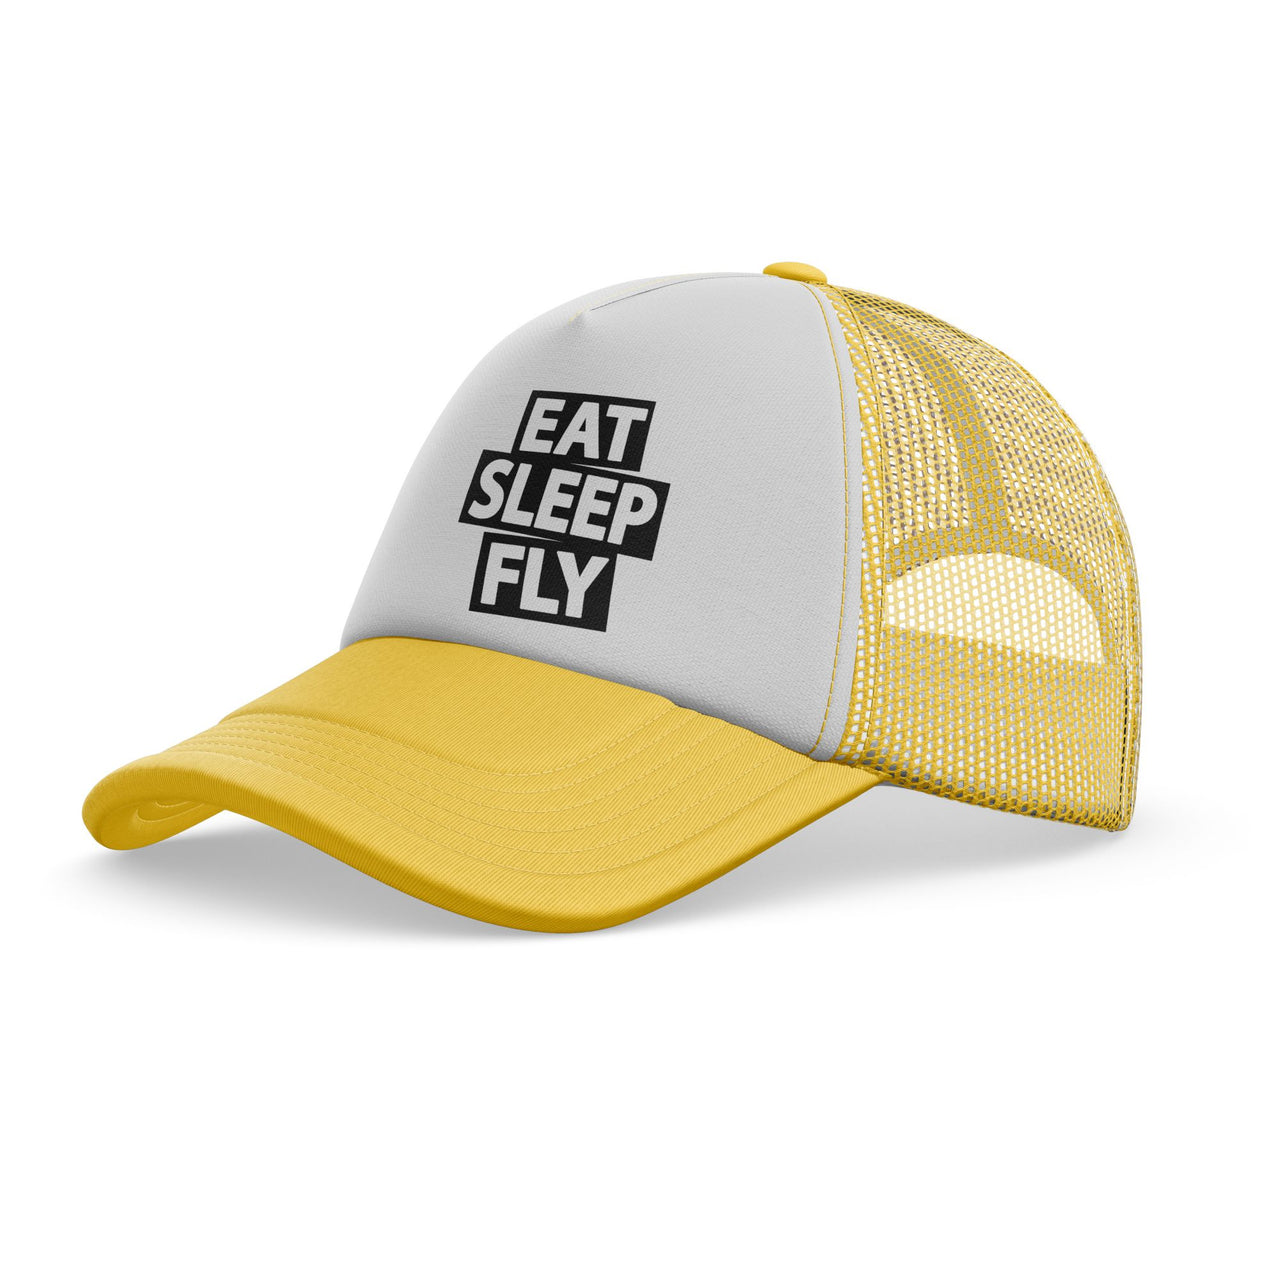 Eat Sleep Fly Designed Trucker Caps & Hats